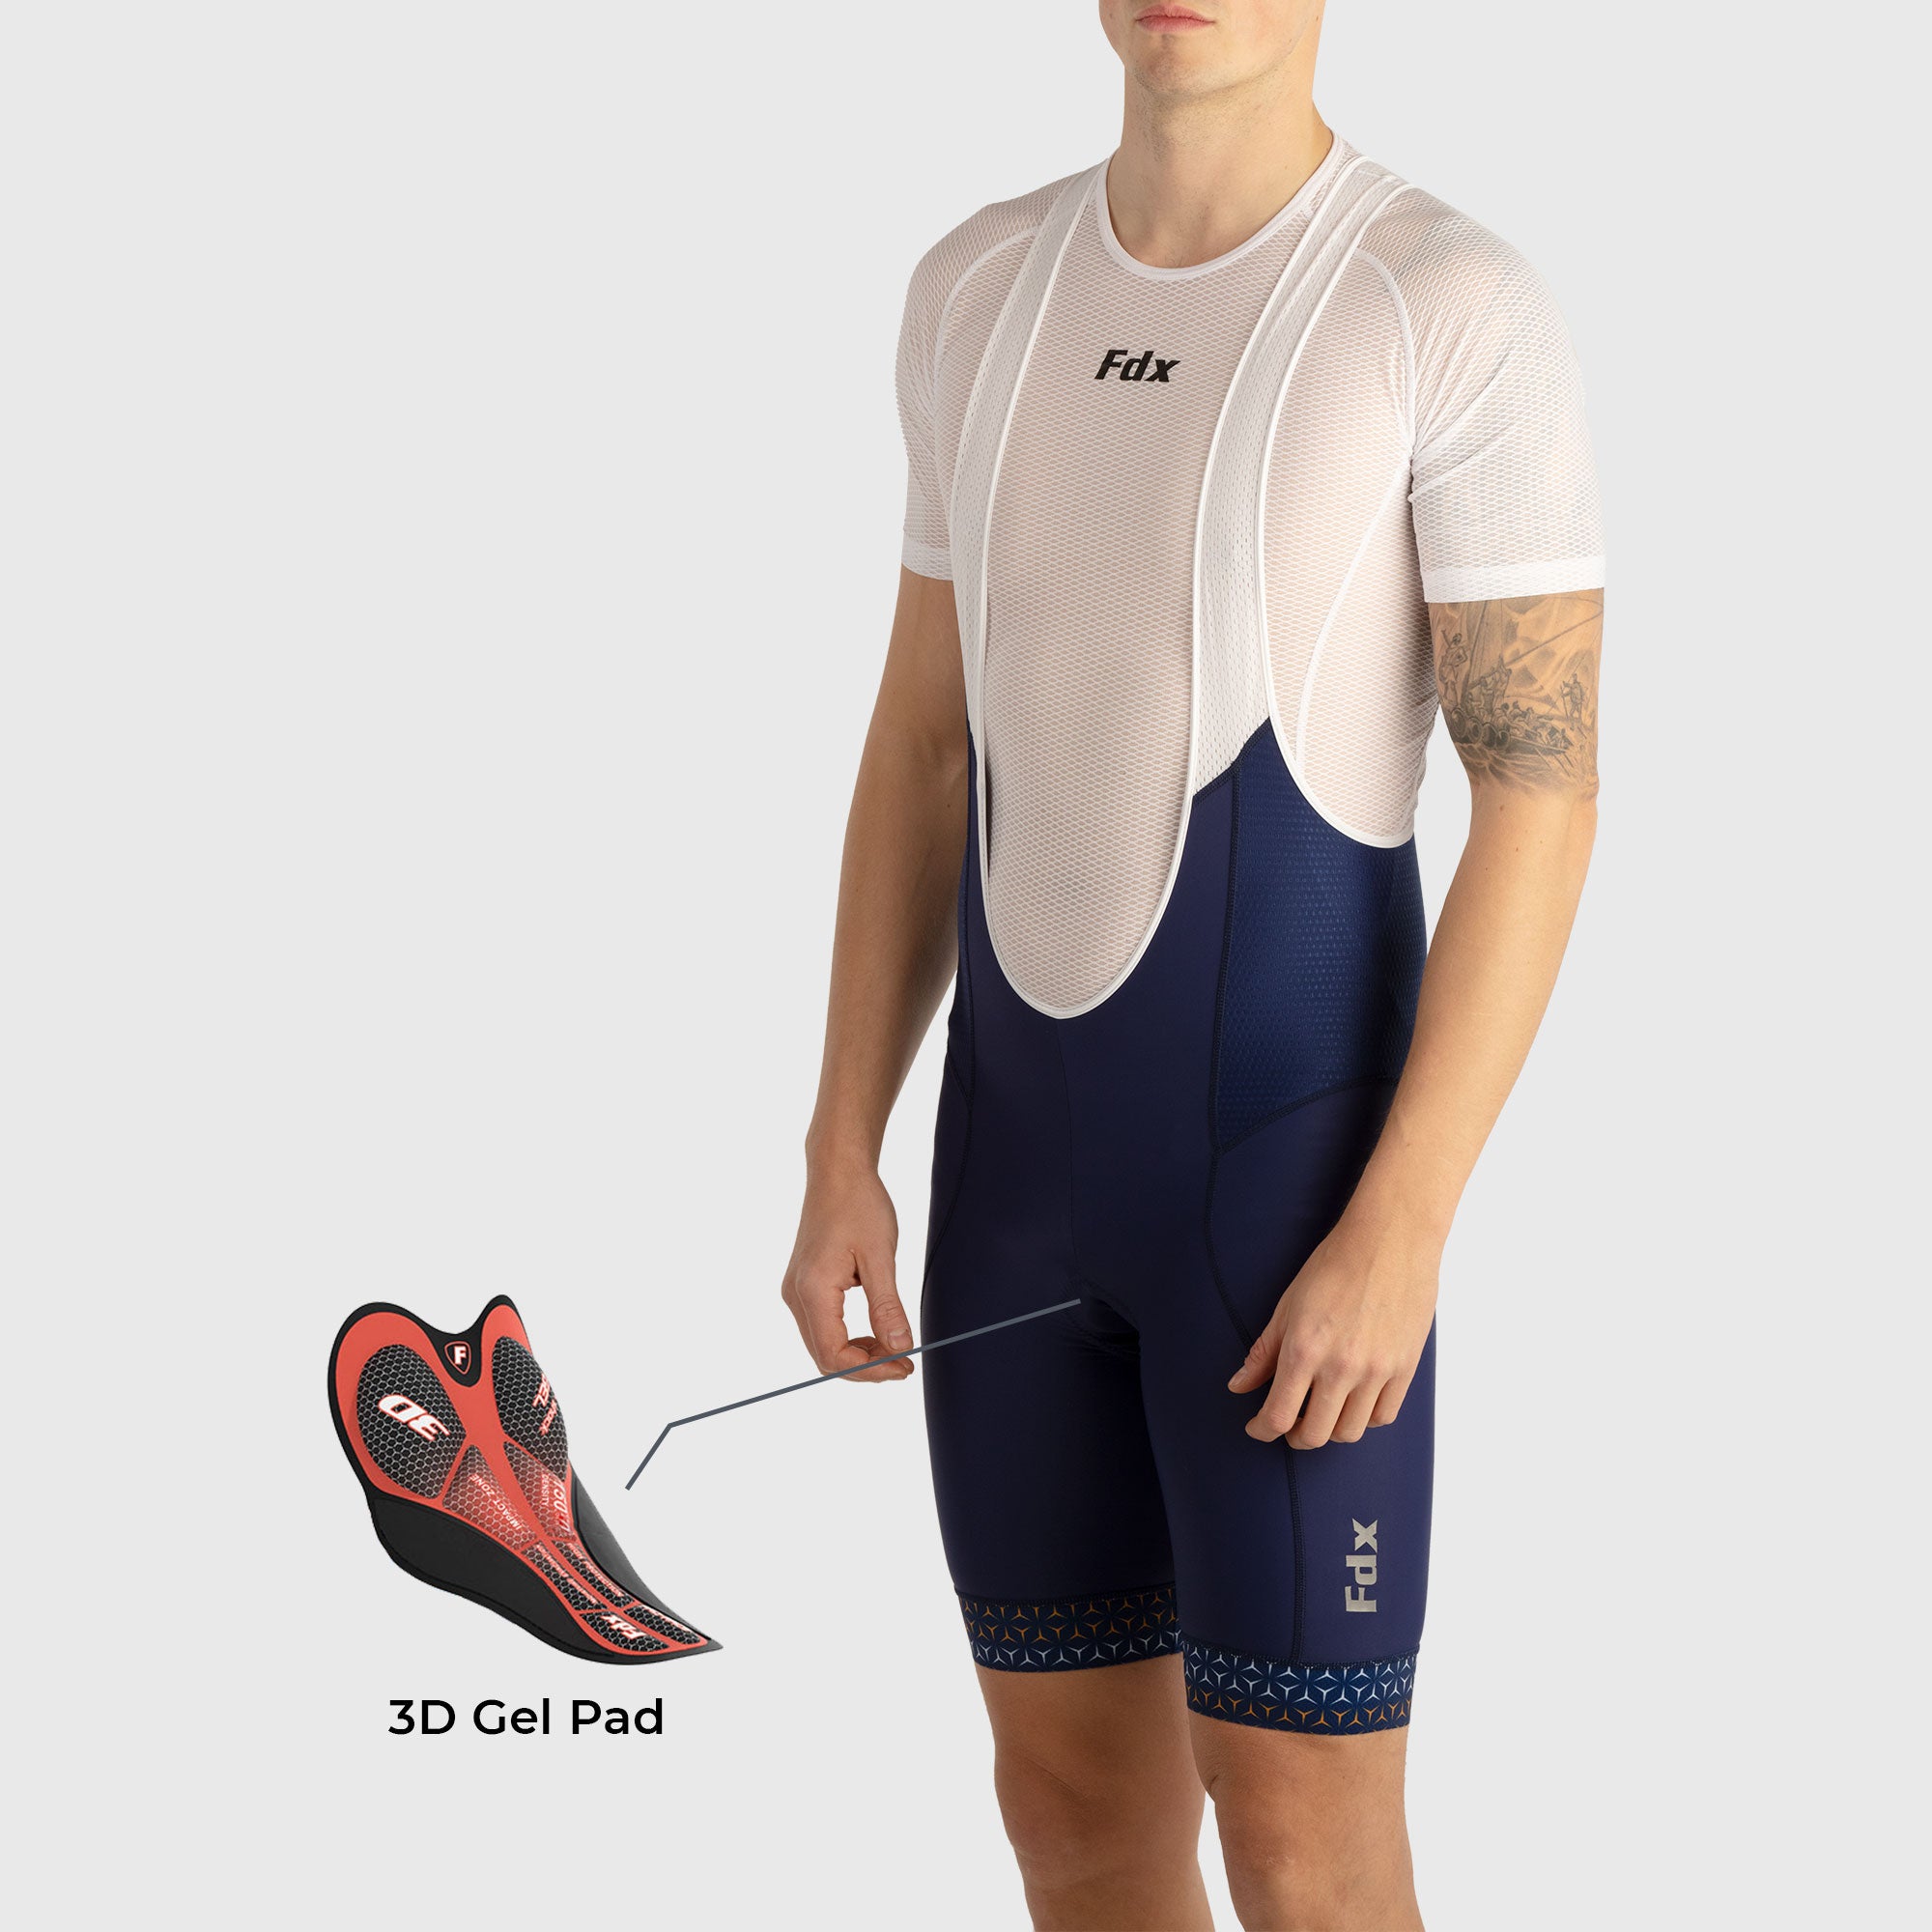 Fdx Windrift Men's Padded Summer Cycling Shorts White & Blue